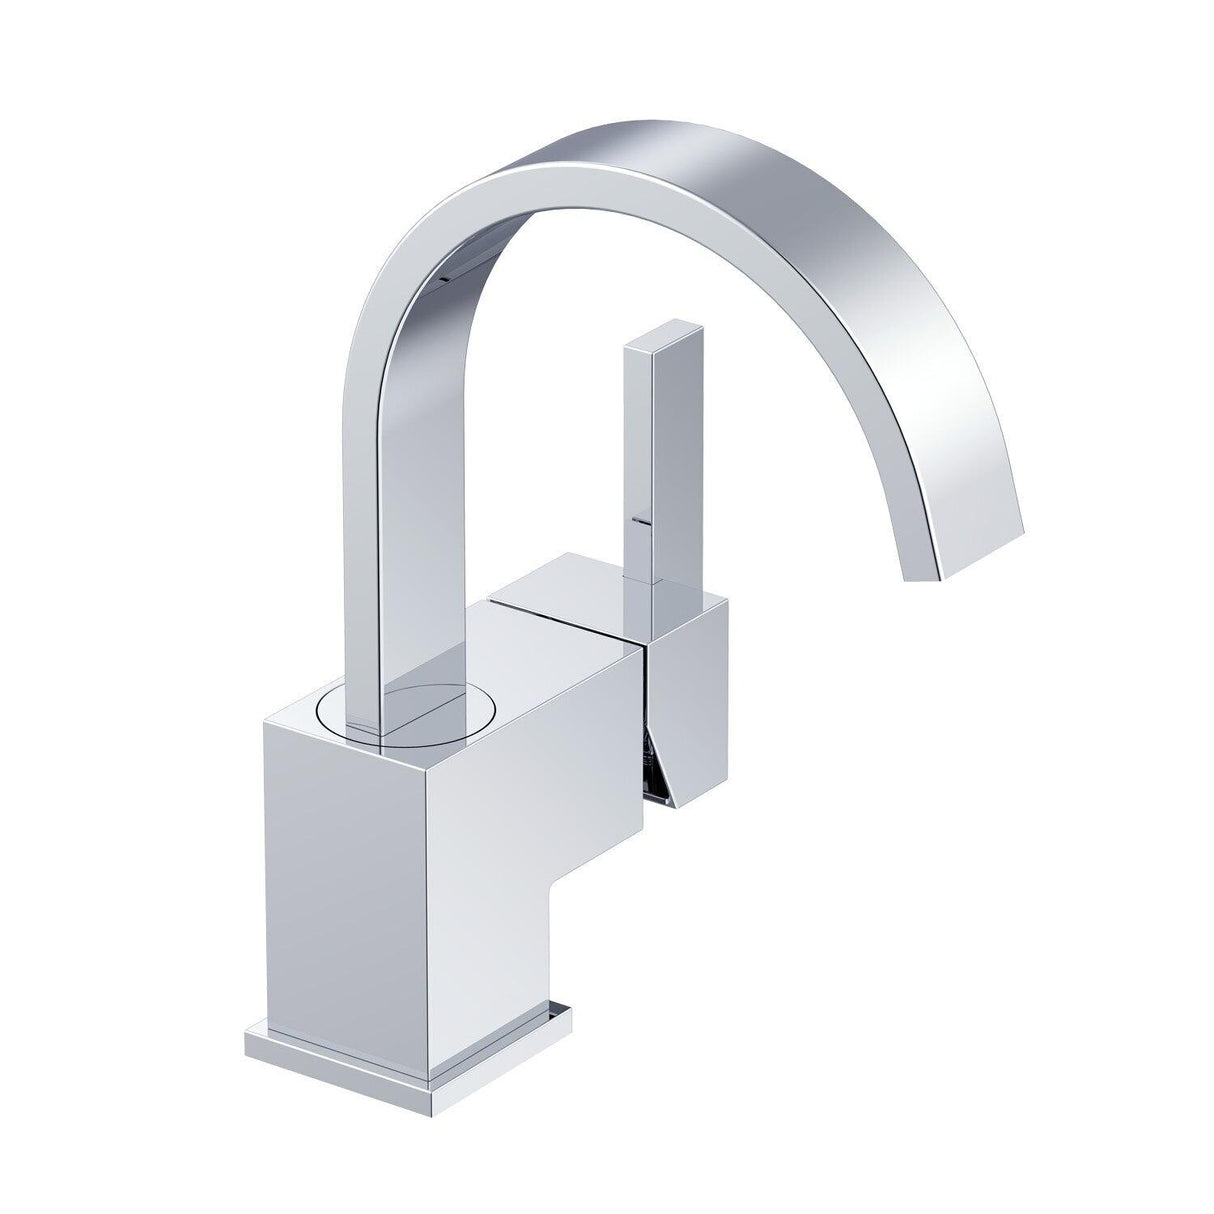 Gerber D221144 Chrome Sirius Single Handle Lavatory Faucet